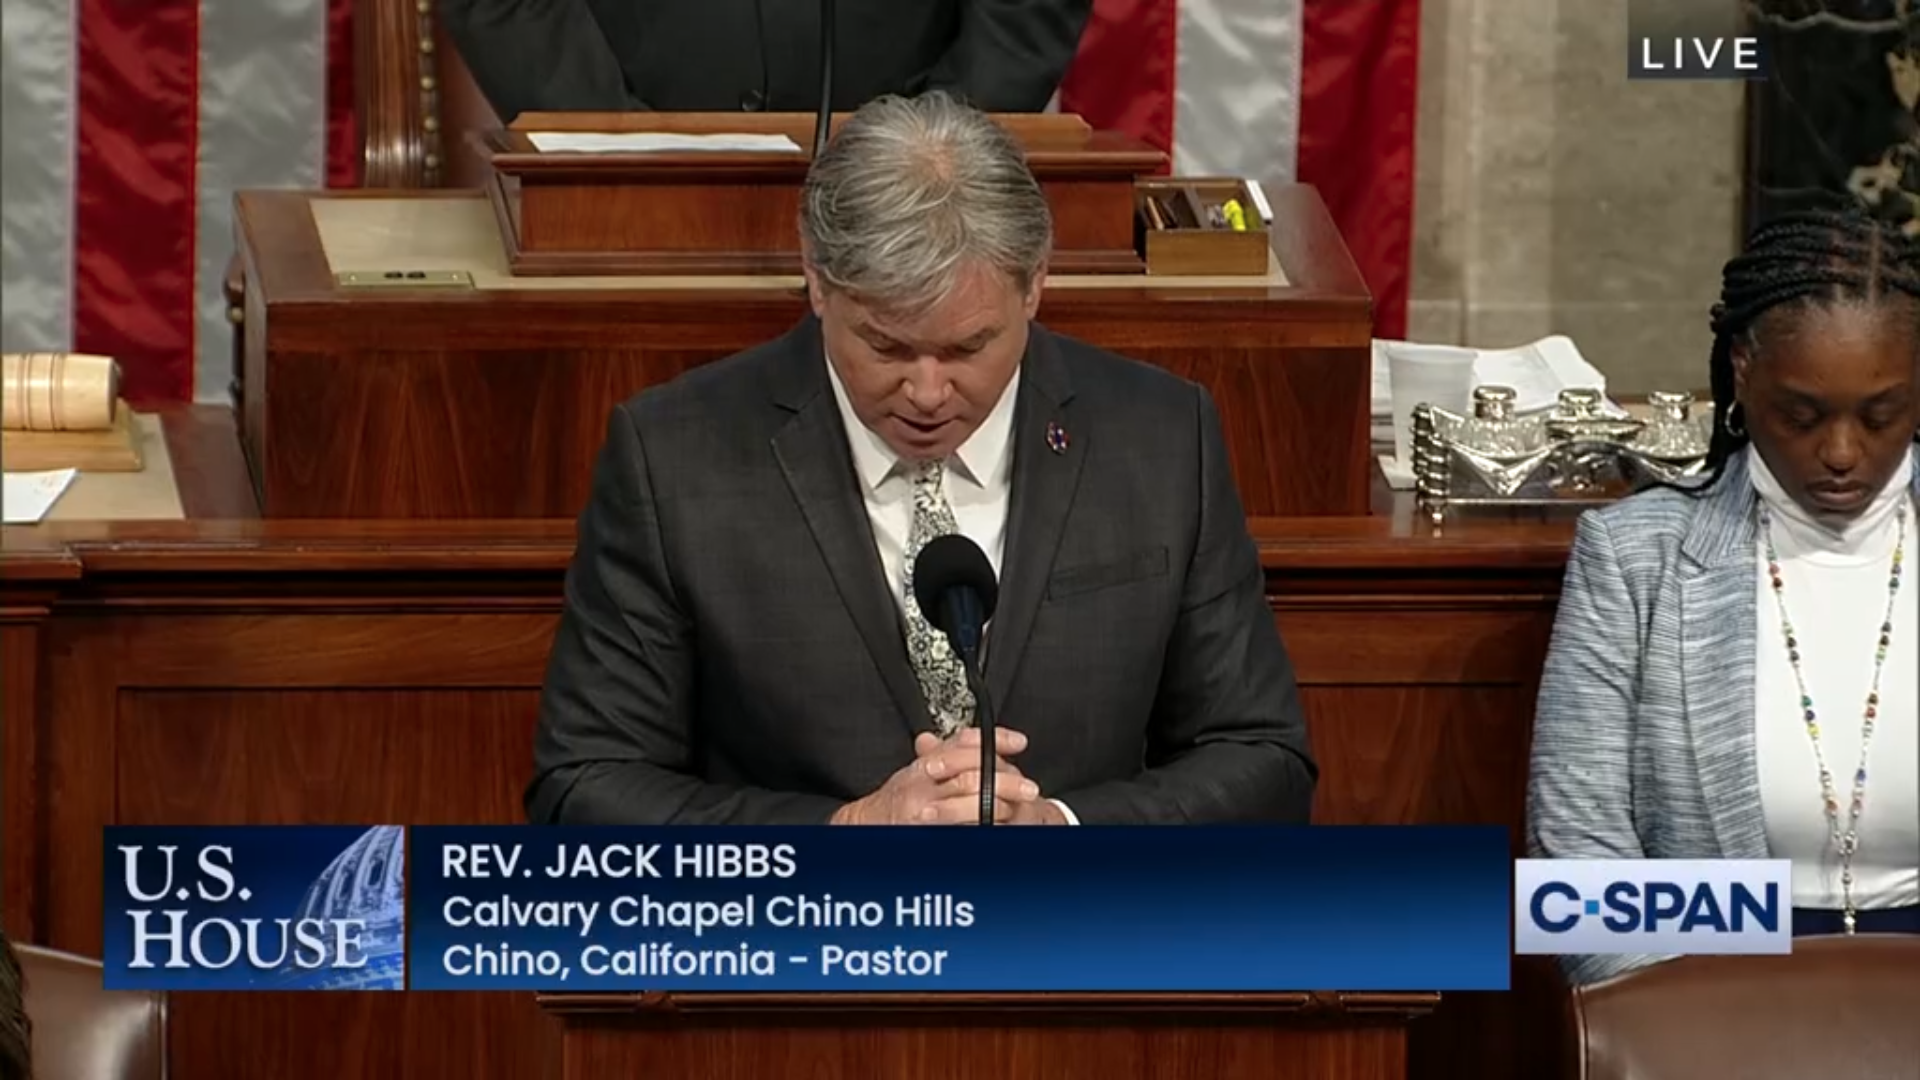 Christian nationalist pastor, Jack Hibbs, praying in the US House